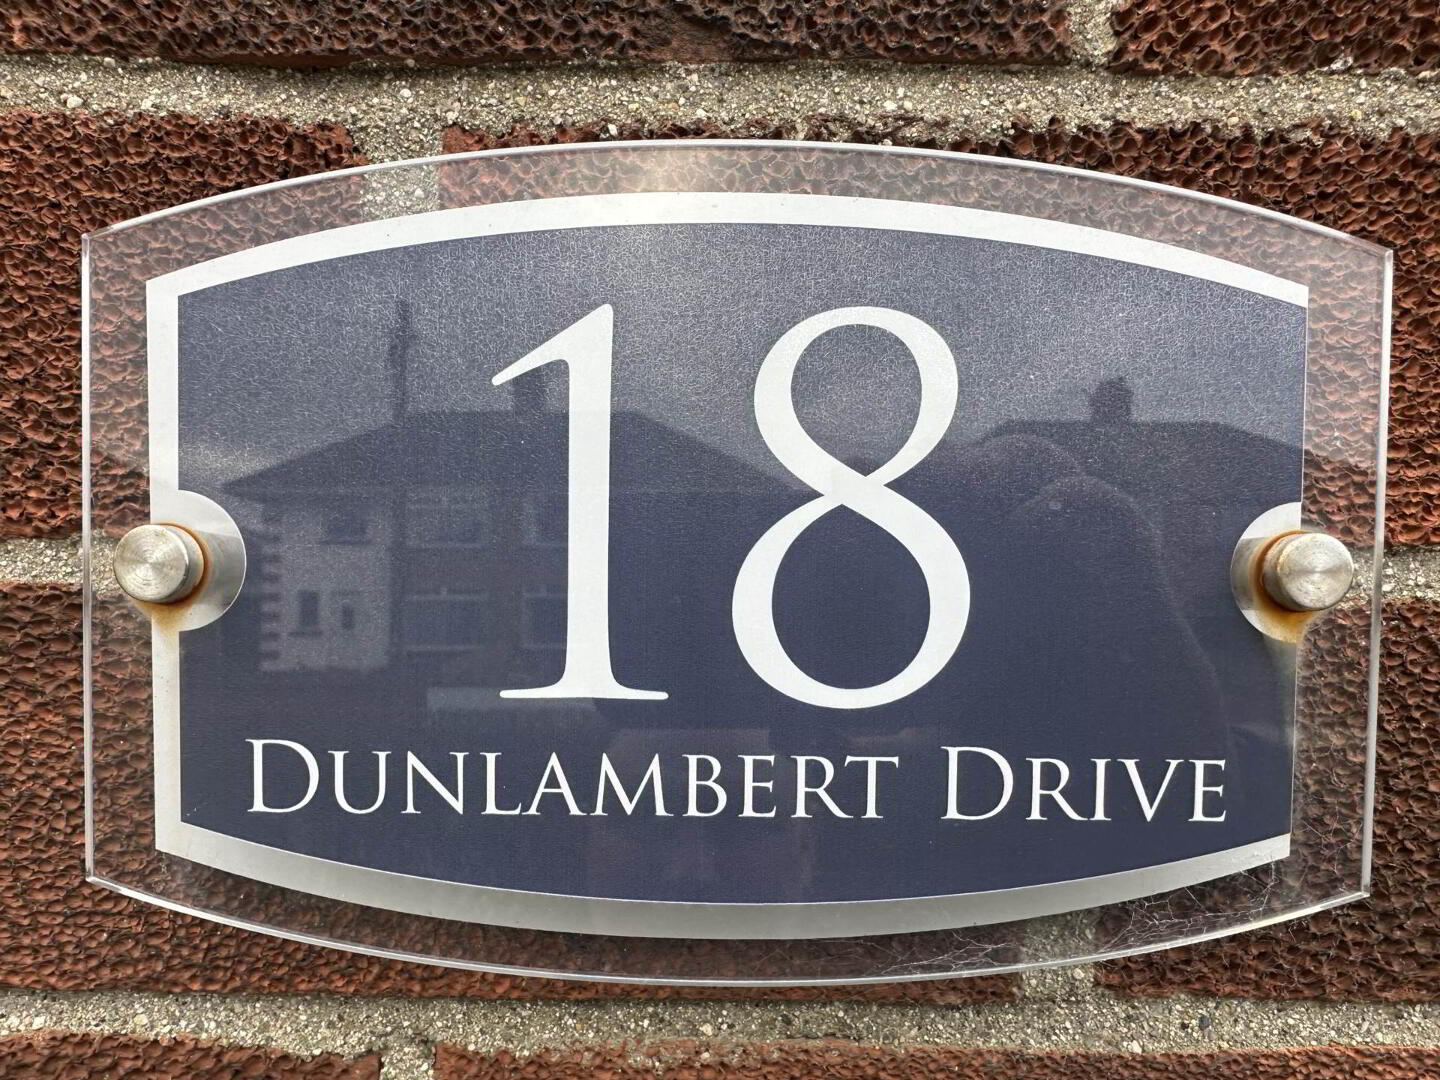 18 Dunlambert Drive